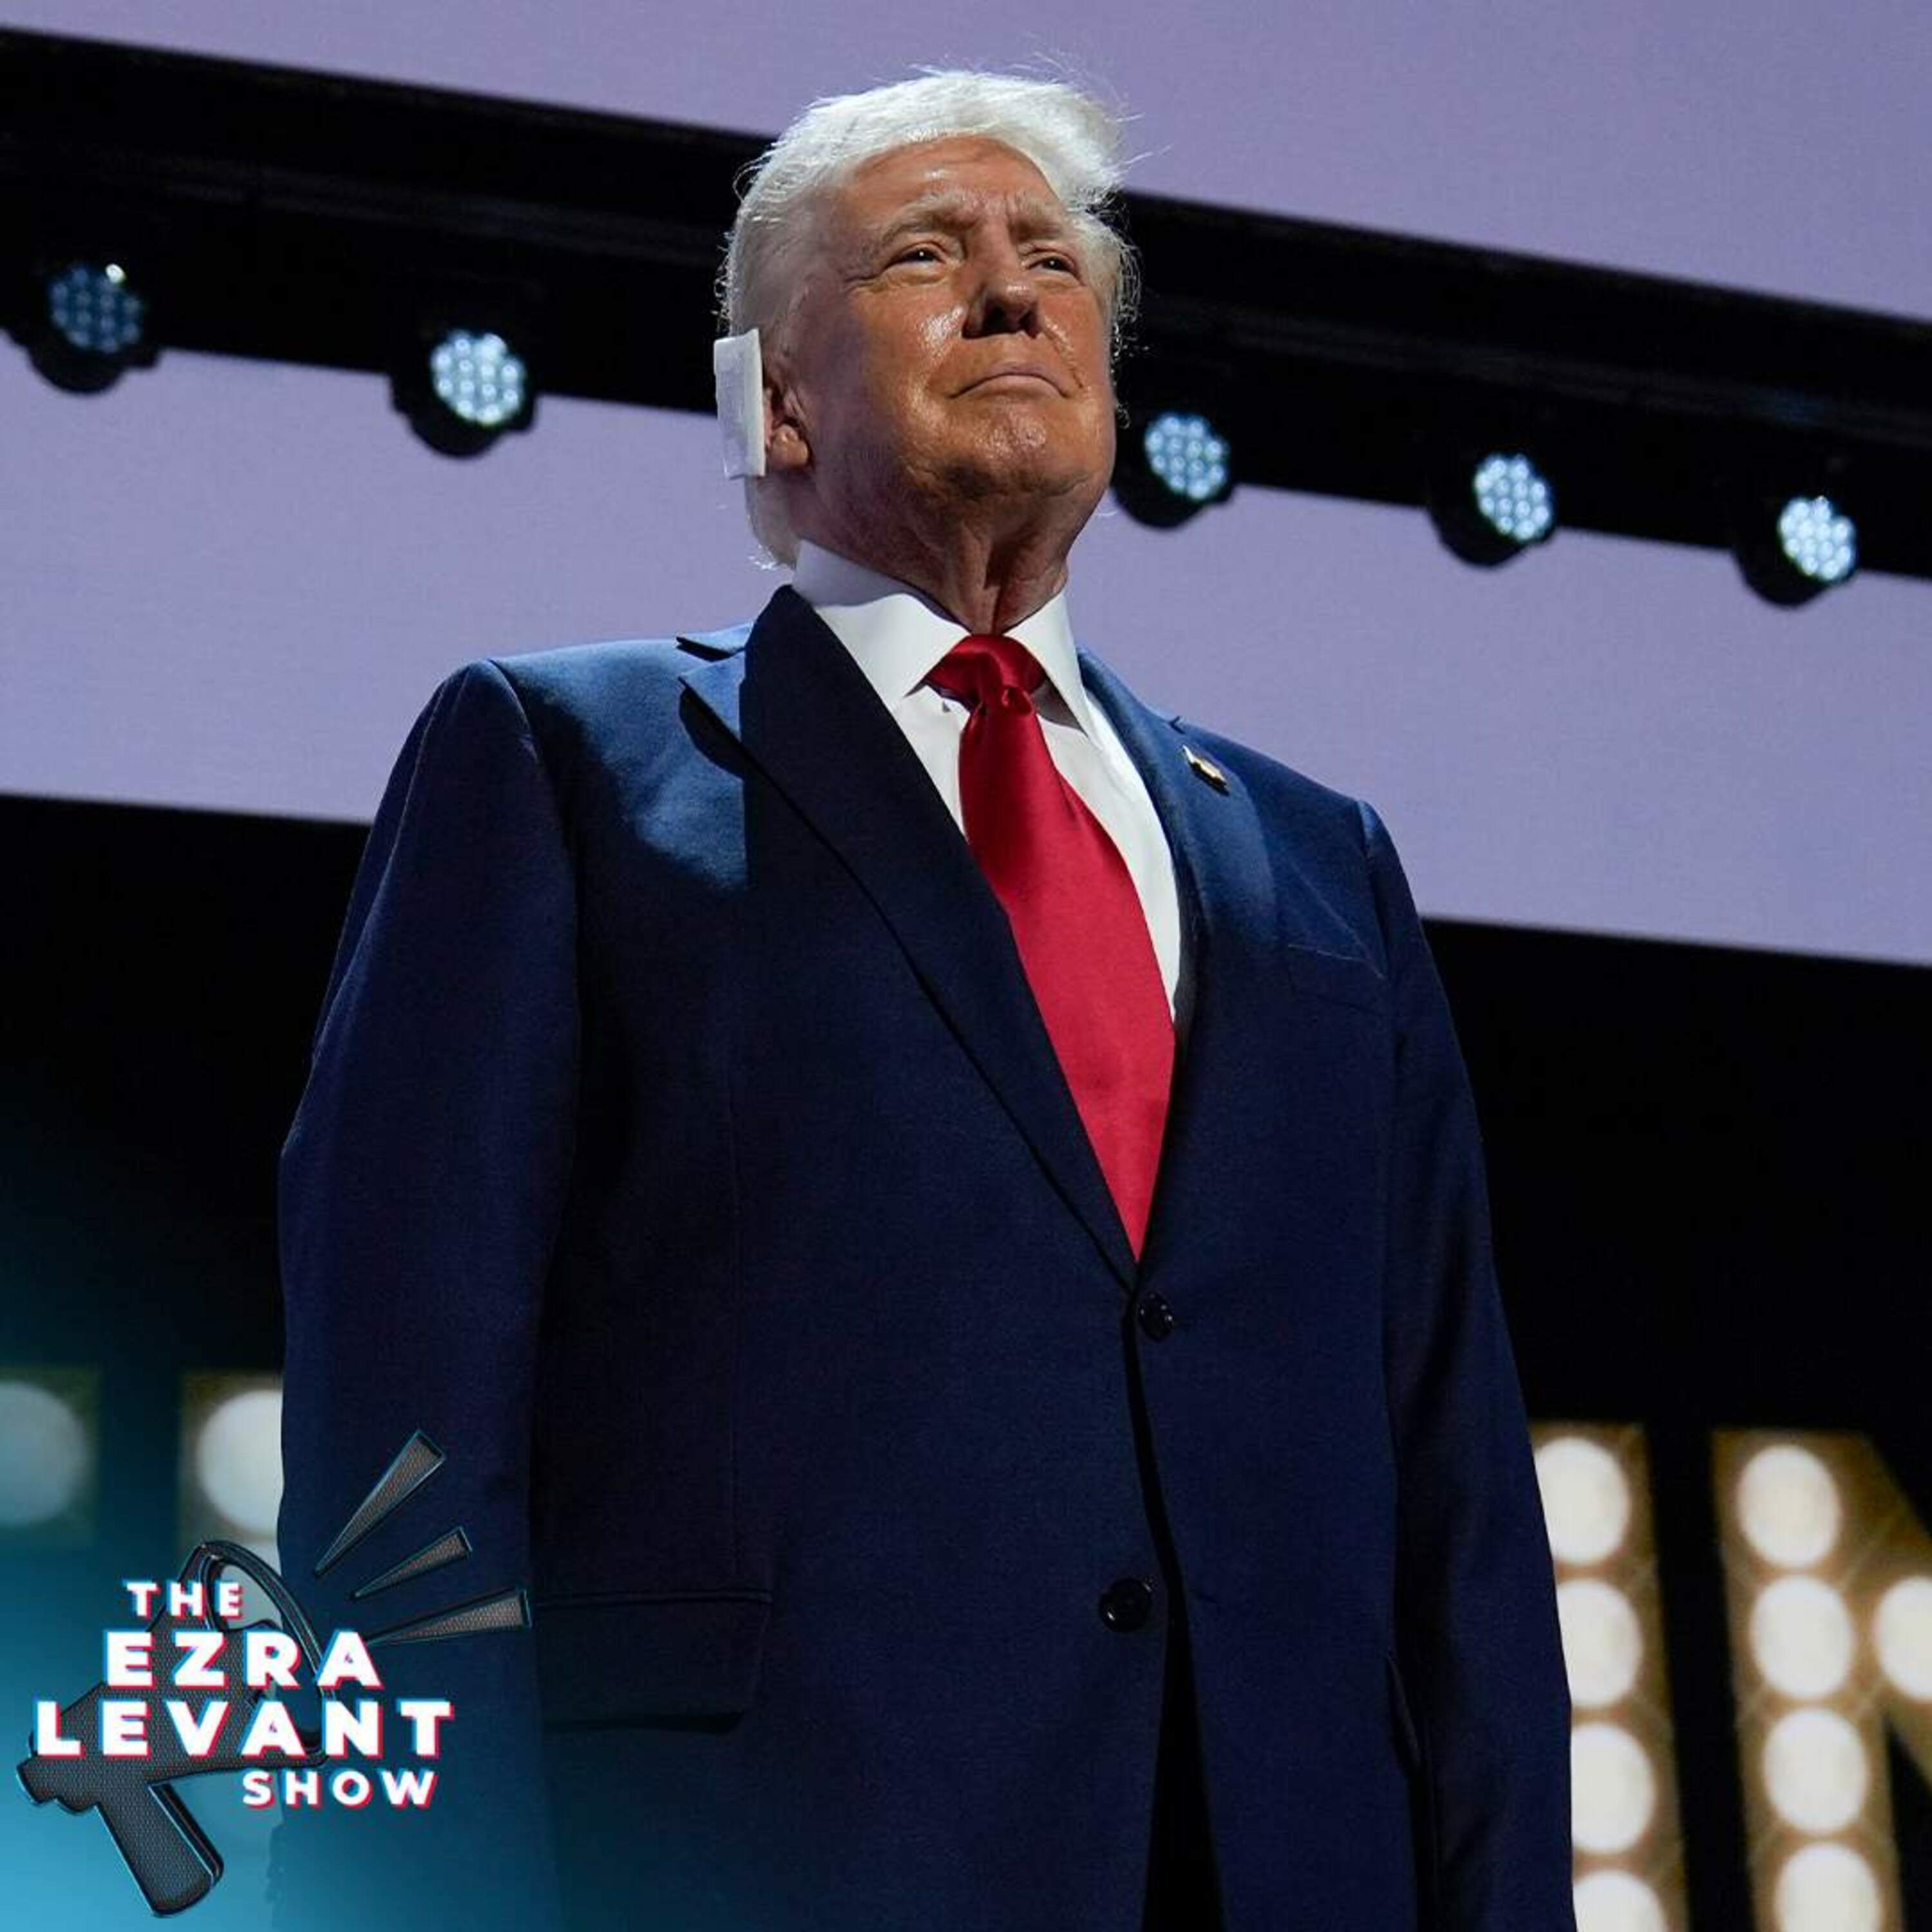 EZRA LEVANT | Trump inspires hope, unity... unlike Biden